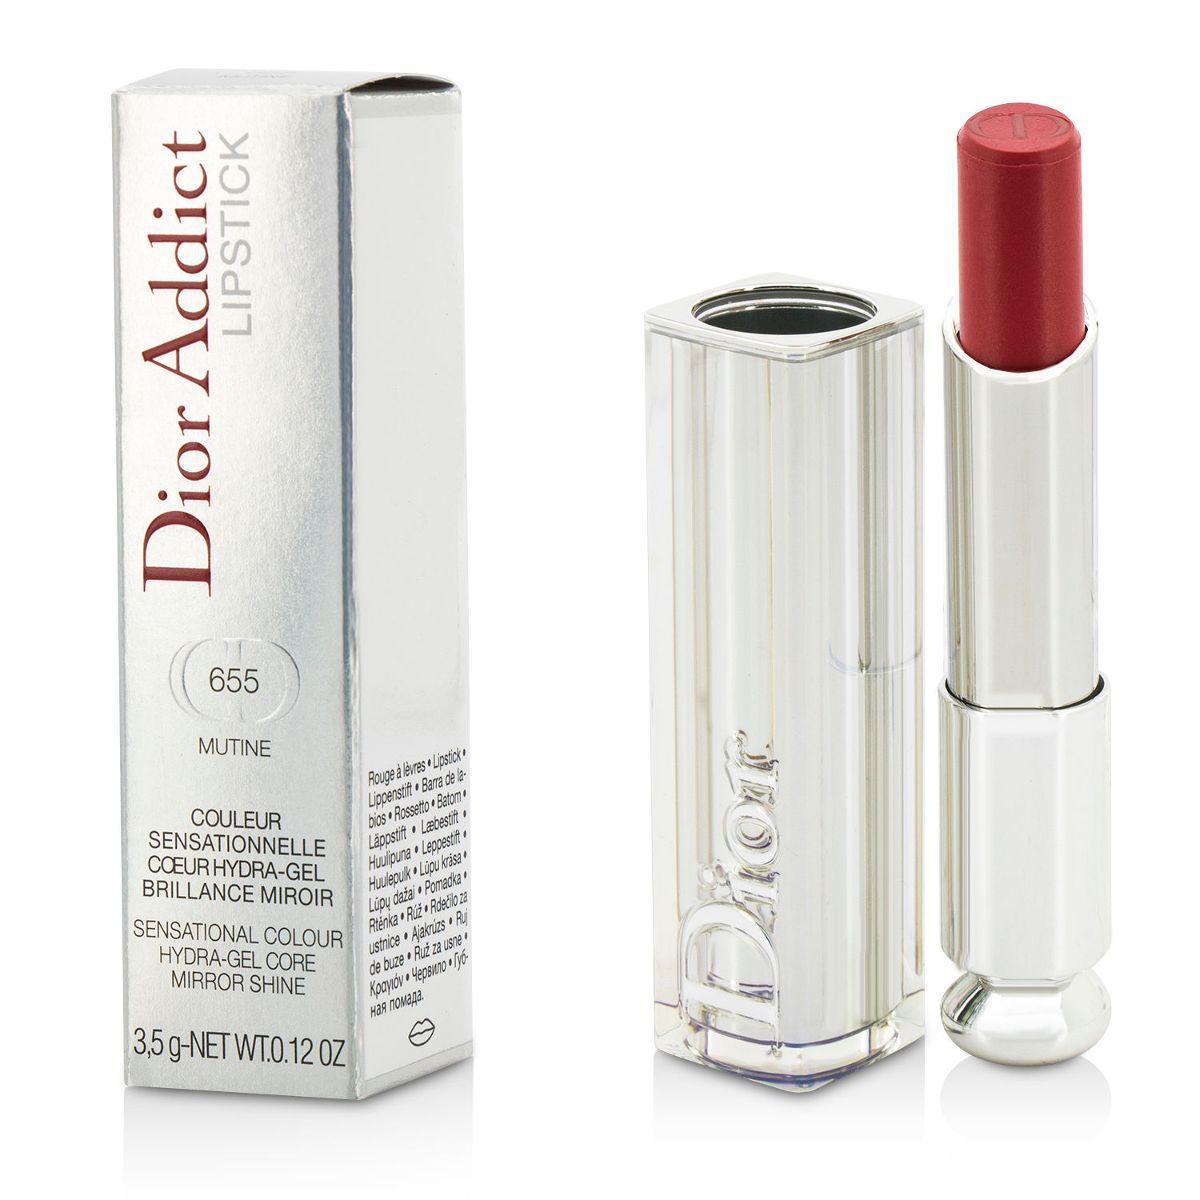 Dior Addict Hydra Gel Core Mirror Shine Lipstick #655 Mutine by Christian Dior @ Perfume Emporium Make Up